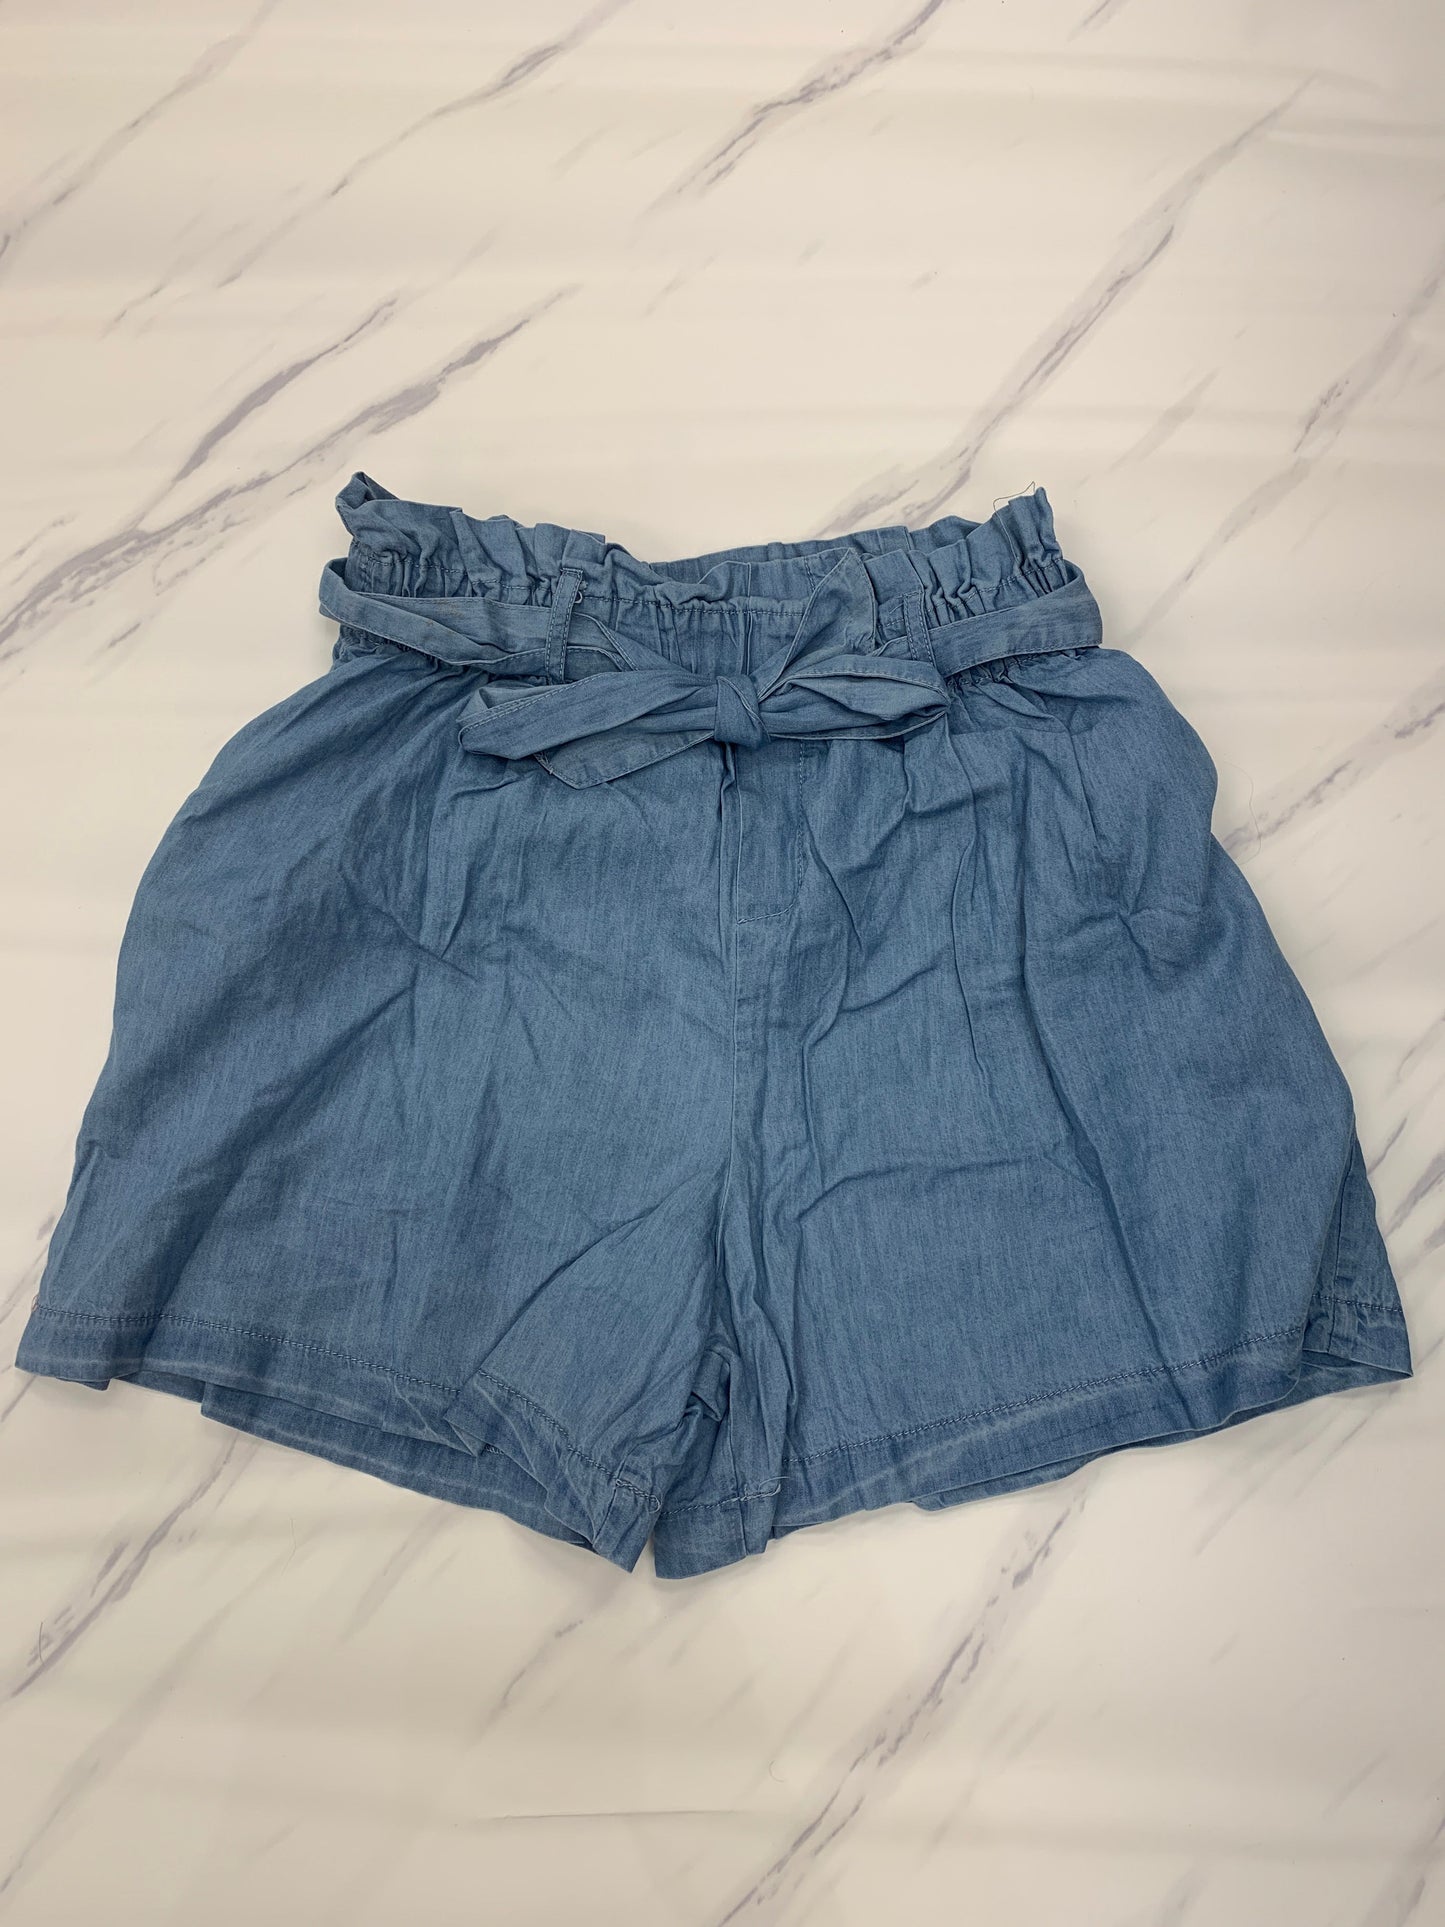 Shorts By Soho Design Group  Size: Xl